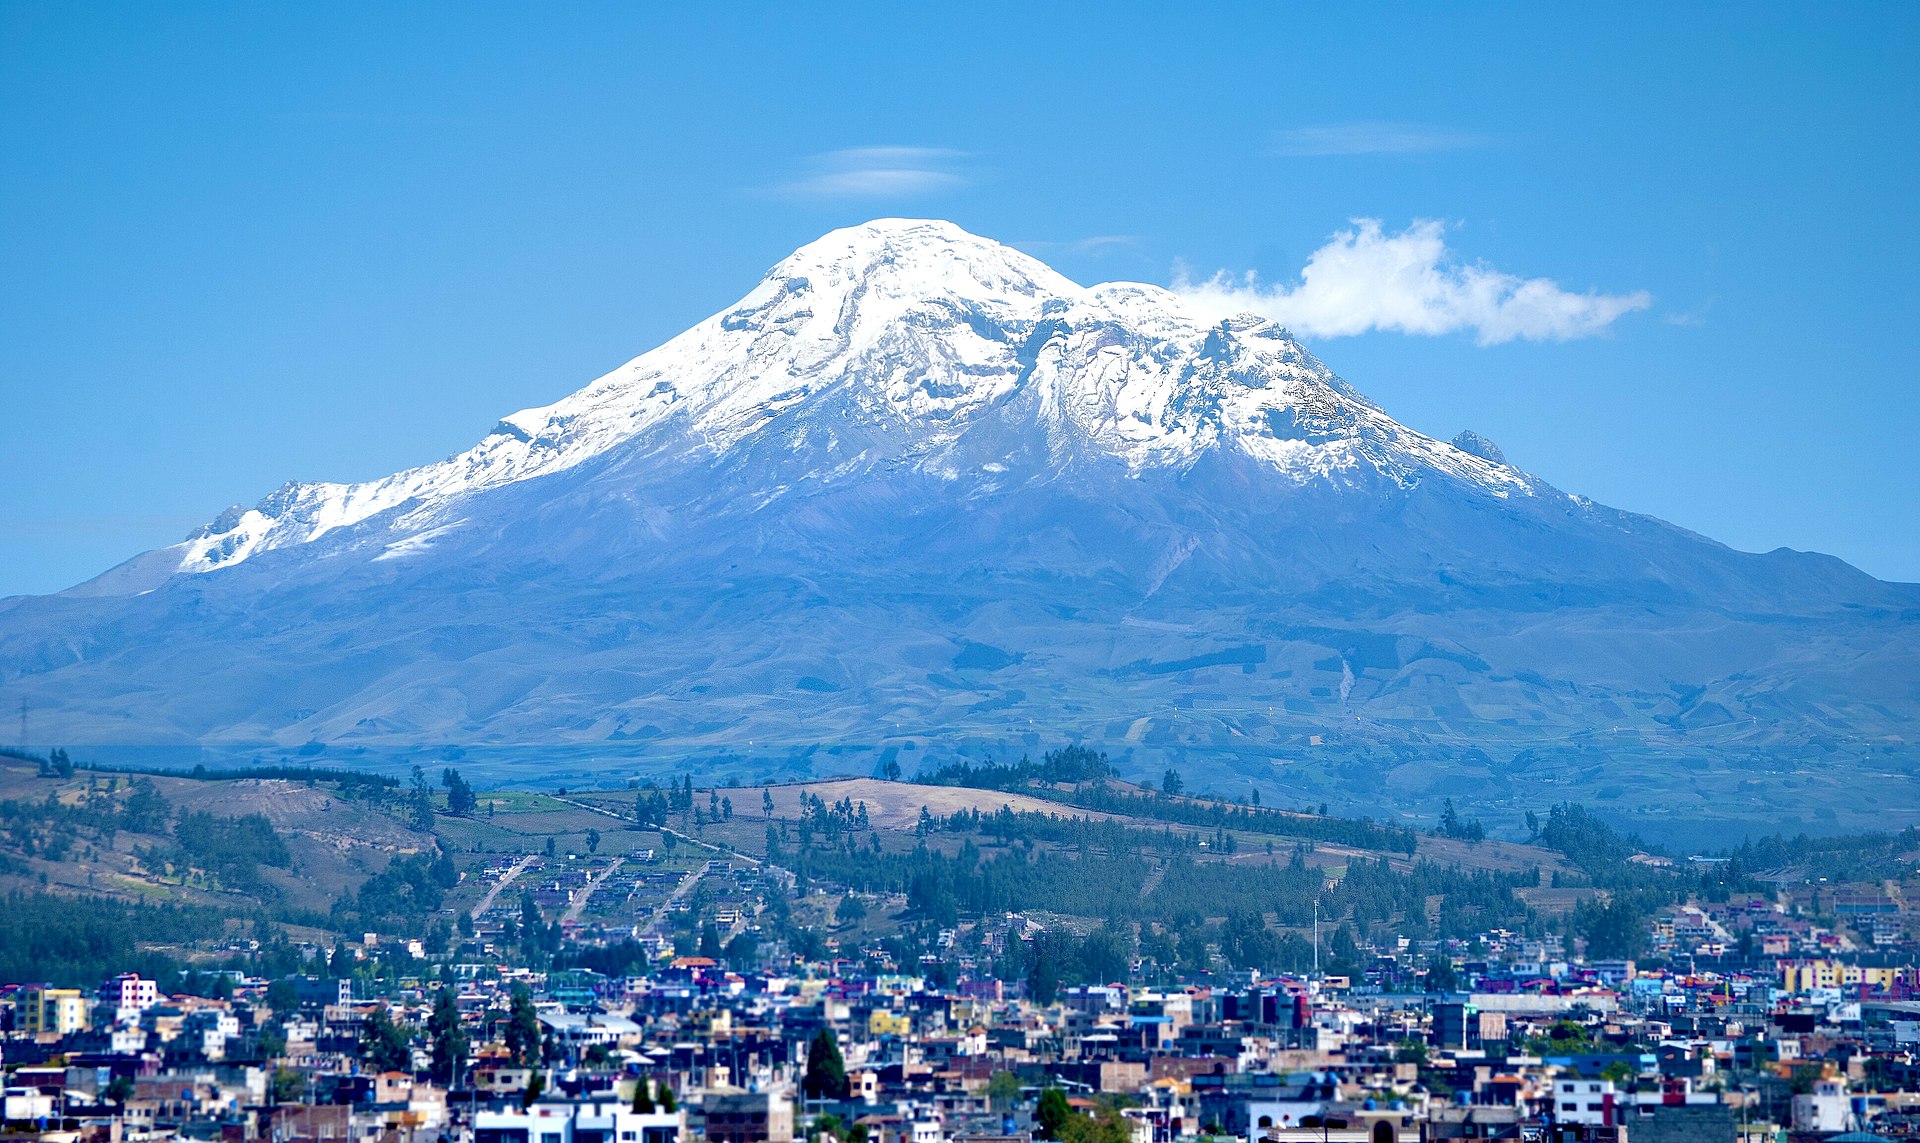 Chimborazo: The Highest Mountain in the World